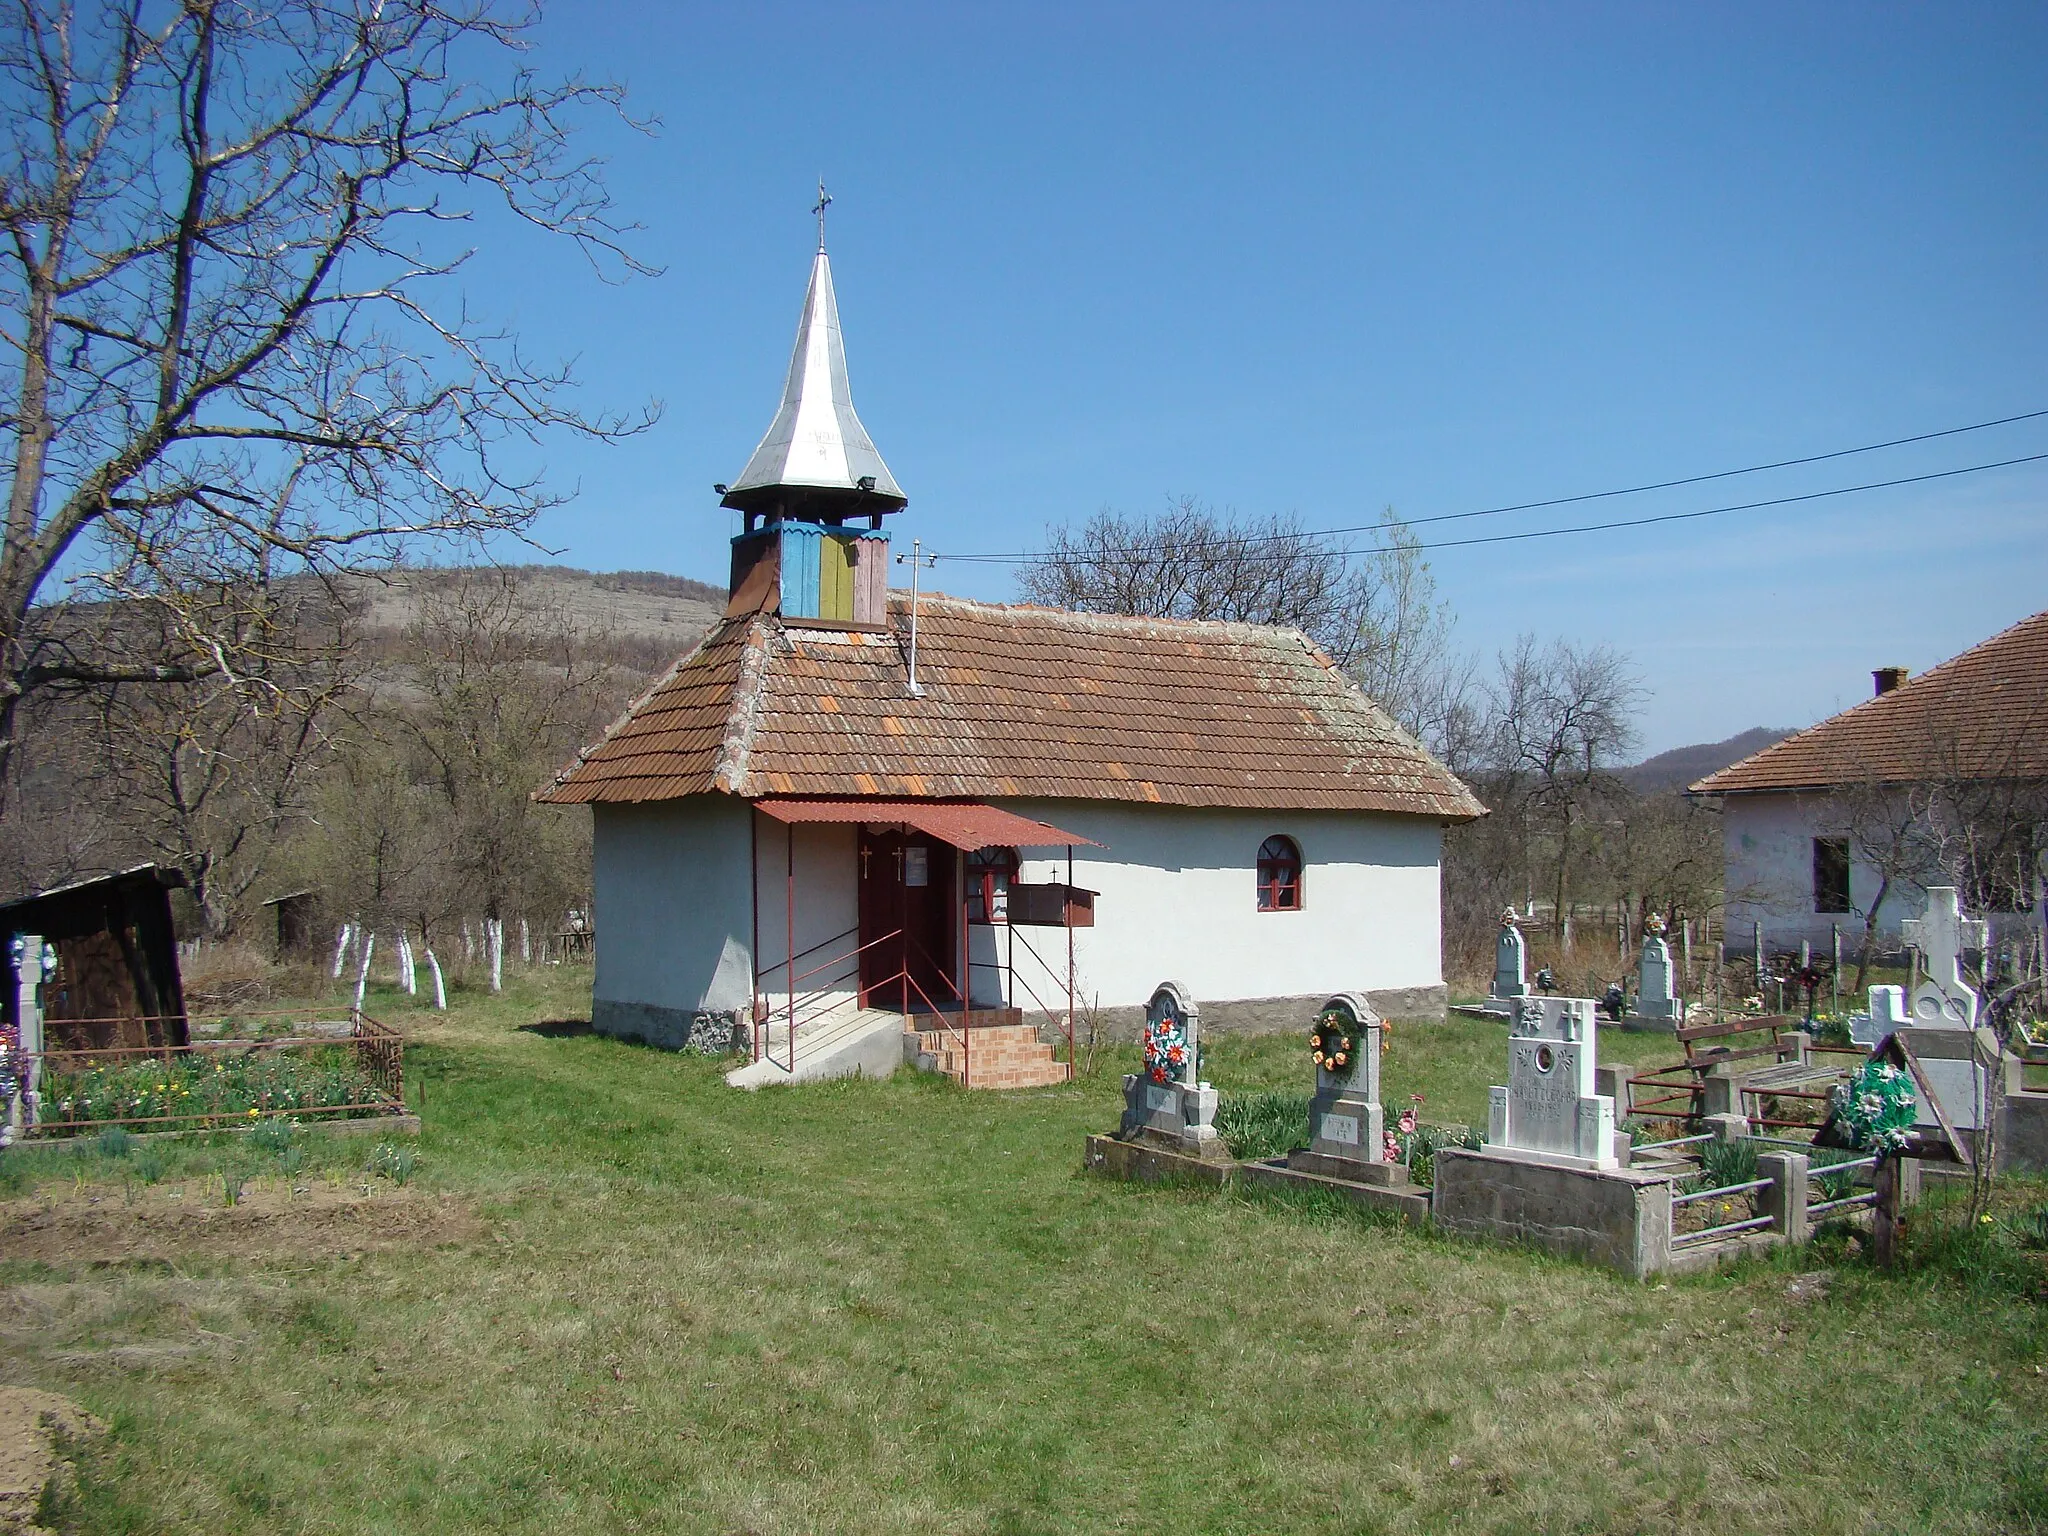 Photo showing: The wooden church from Panc-Săliște, Hunedoara county